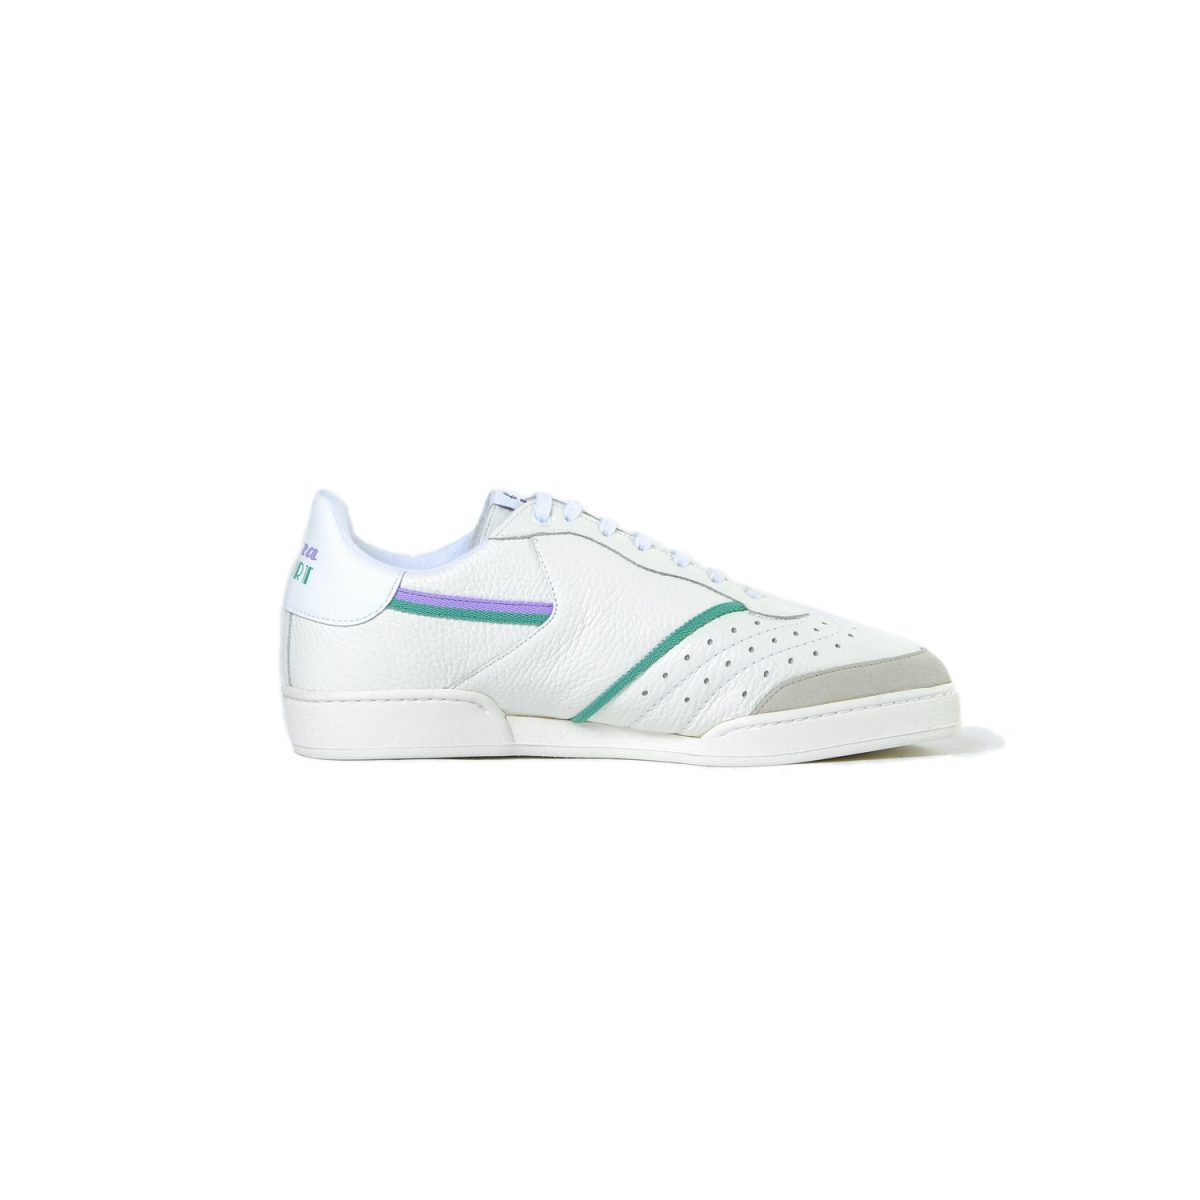 Tisza shoes - Sport - White-purple-green